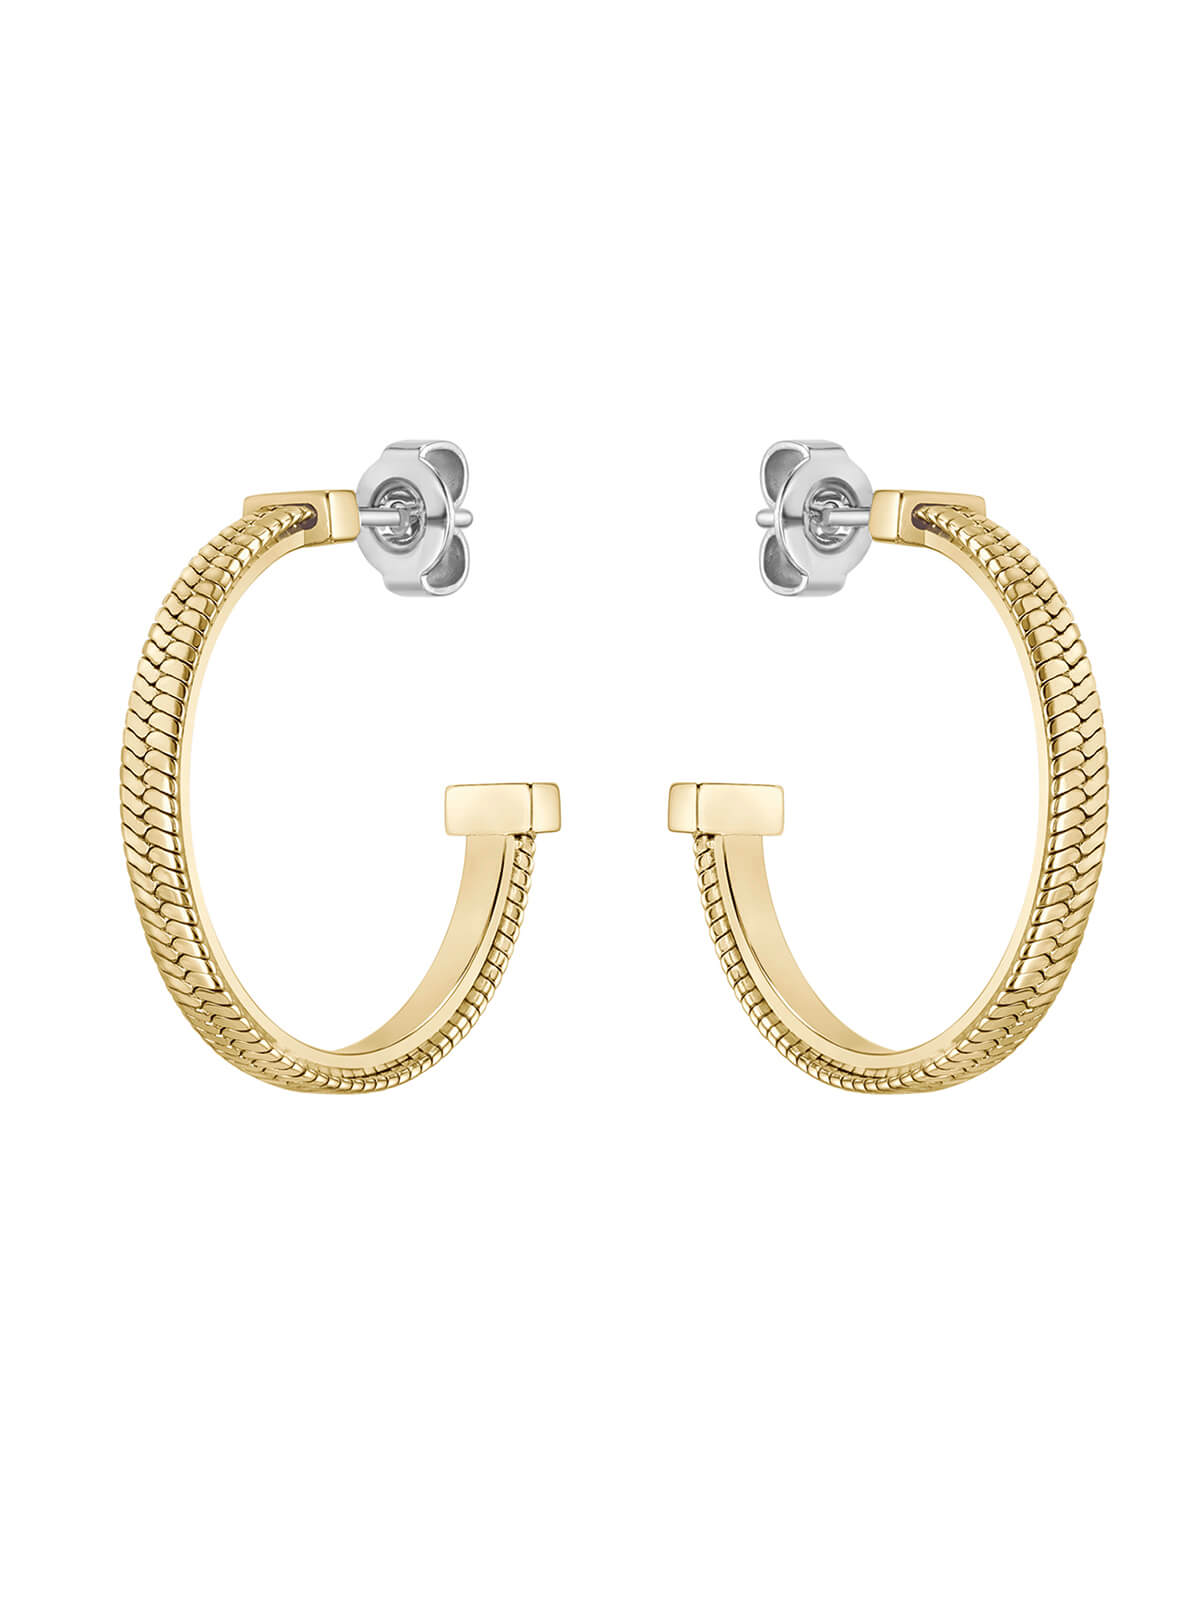 BOSS Zia Hoop Earrings in Gold Plating 1580483